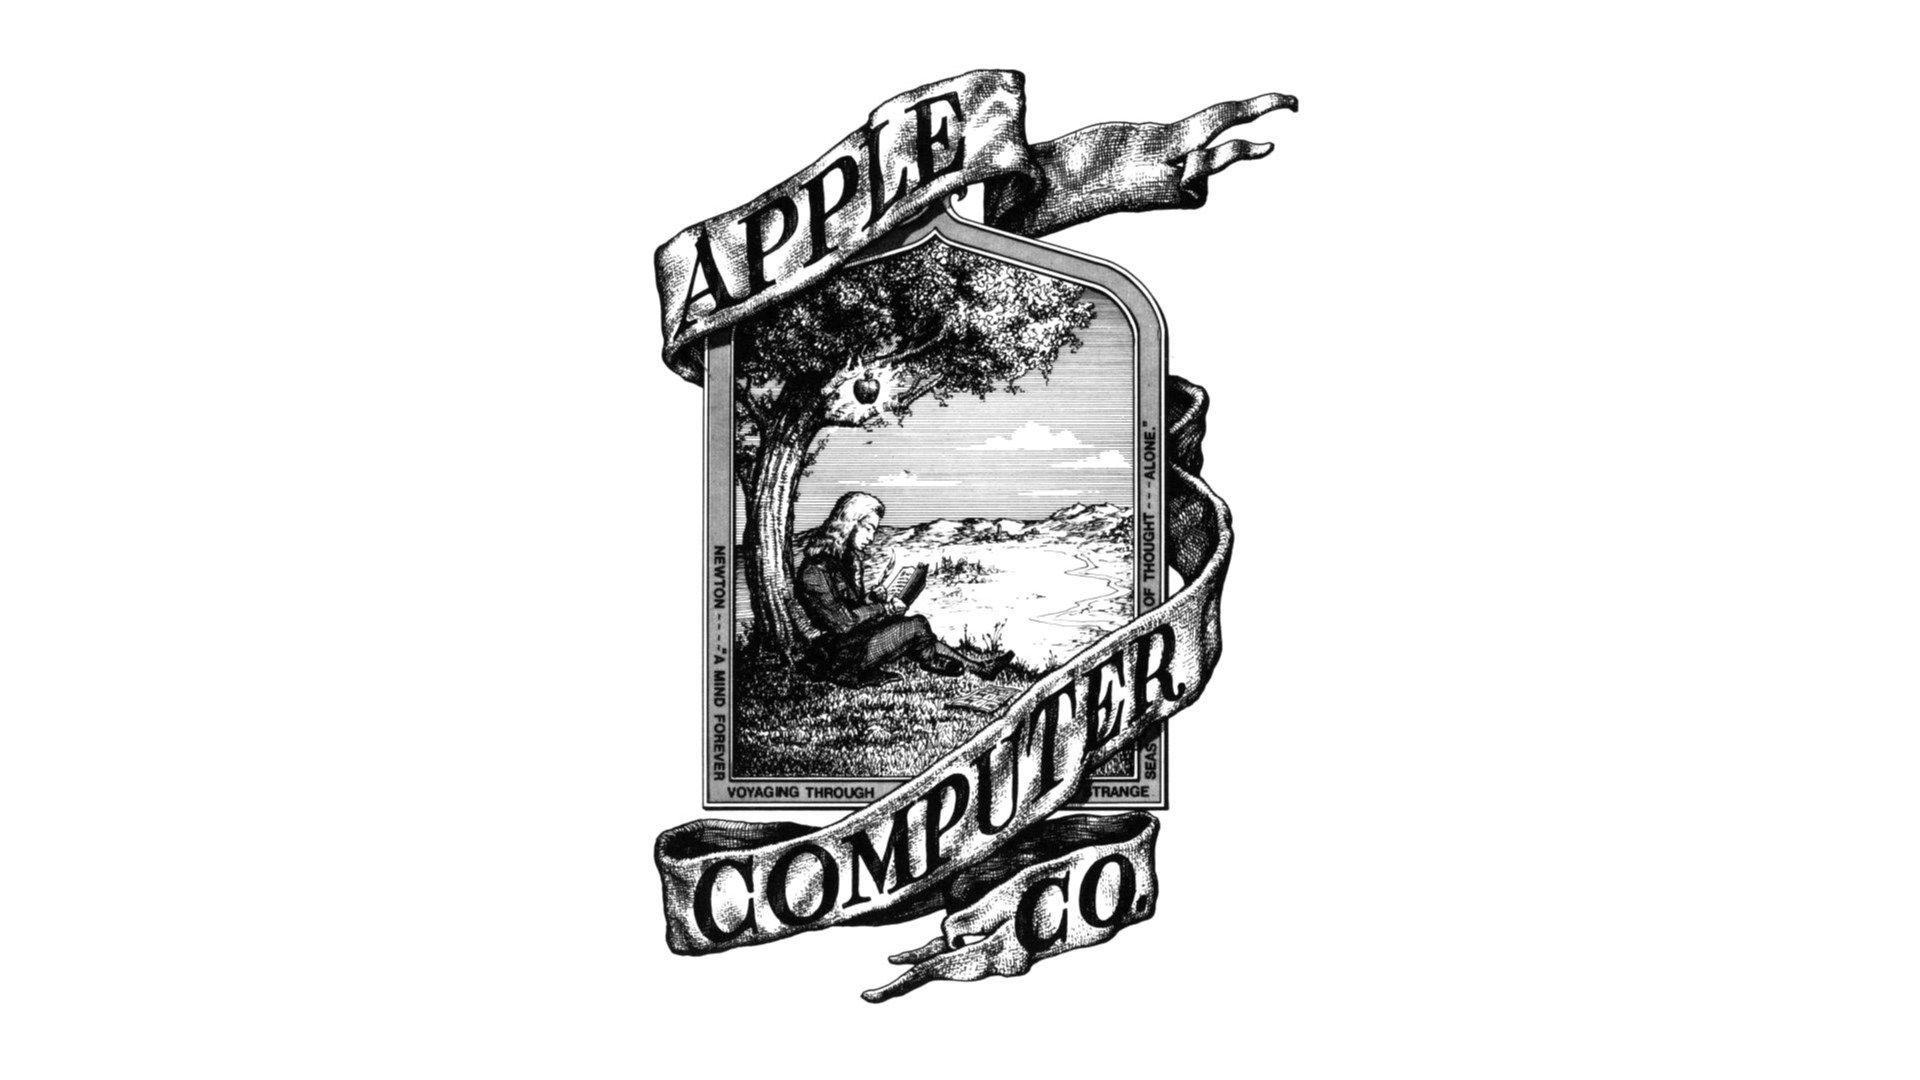 Original Apple Computer Logo - Original Apple logo for the Apple Computer Co